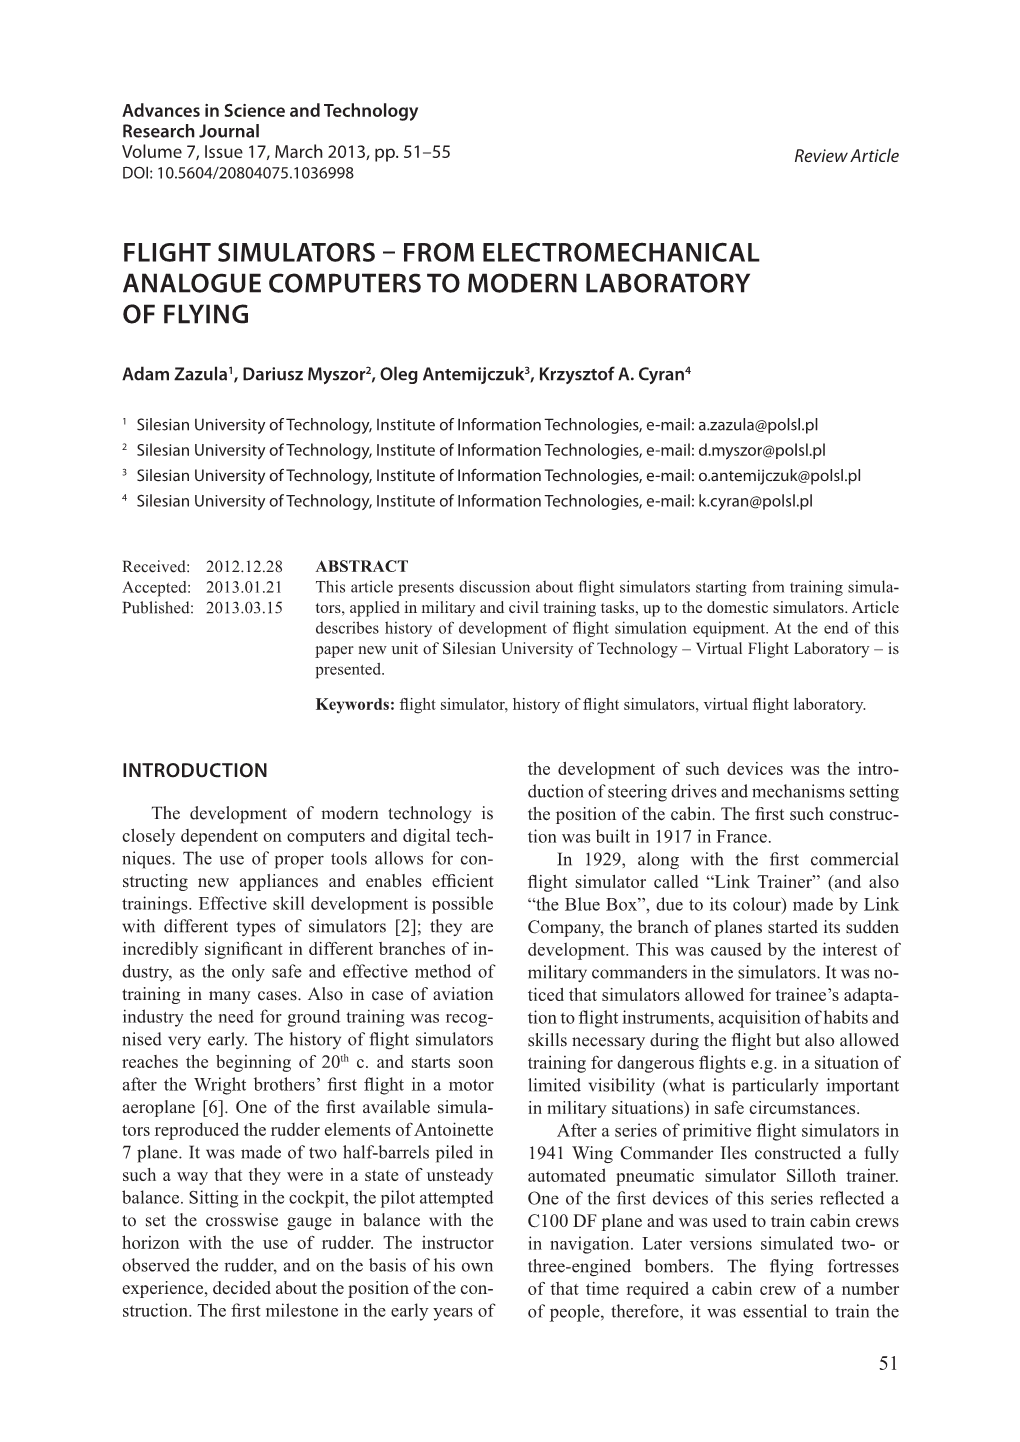 Flight Simulators – from Electromechanical Analogue Computers to Modern Laboratory of Flying